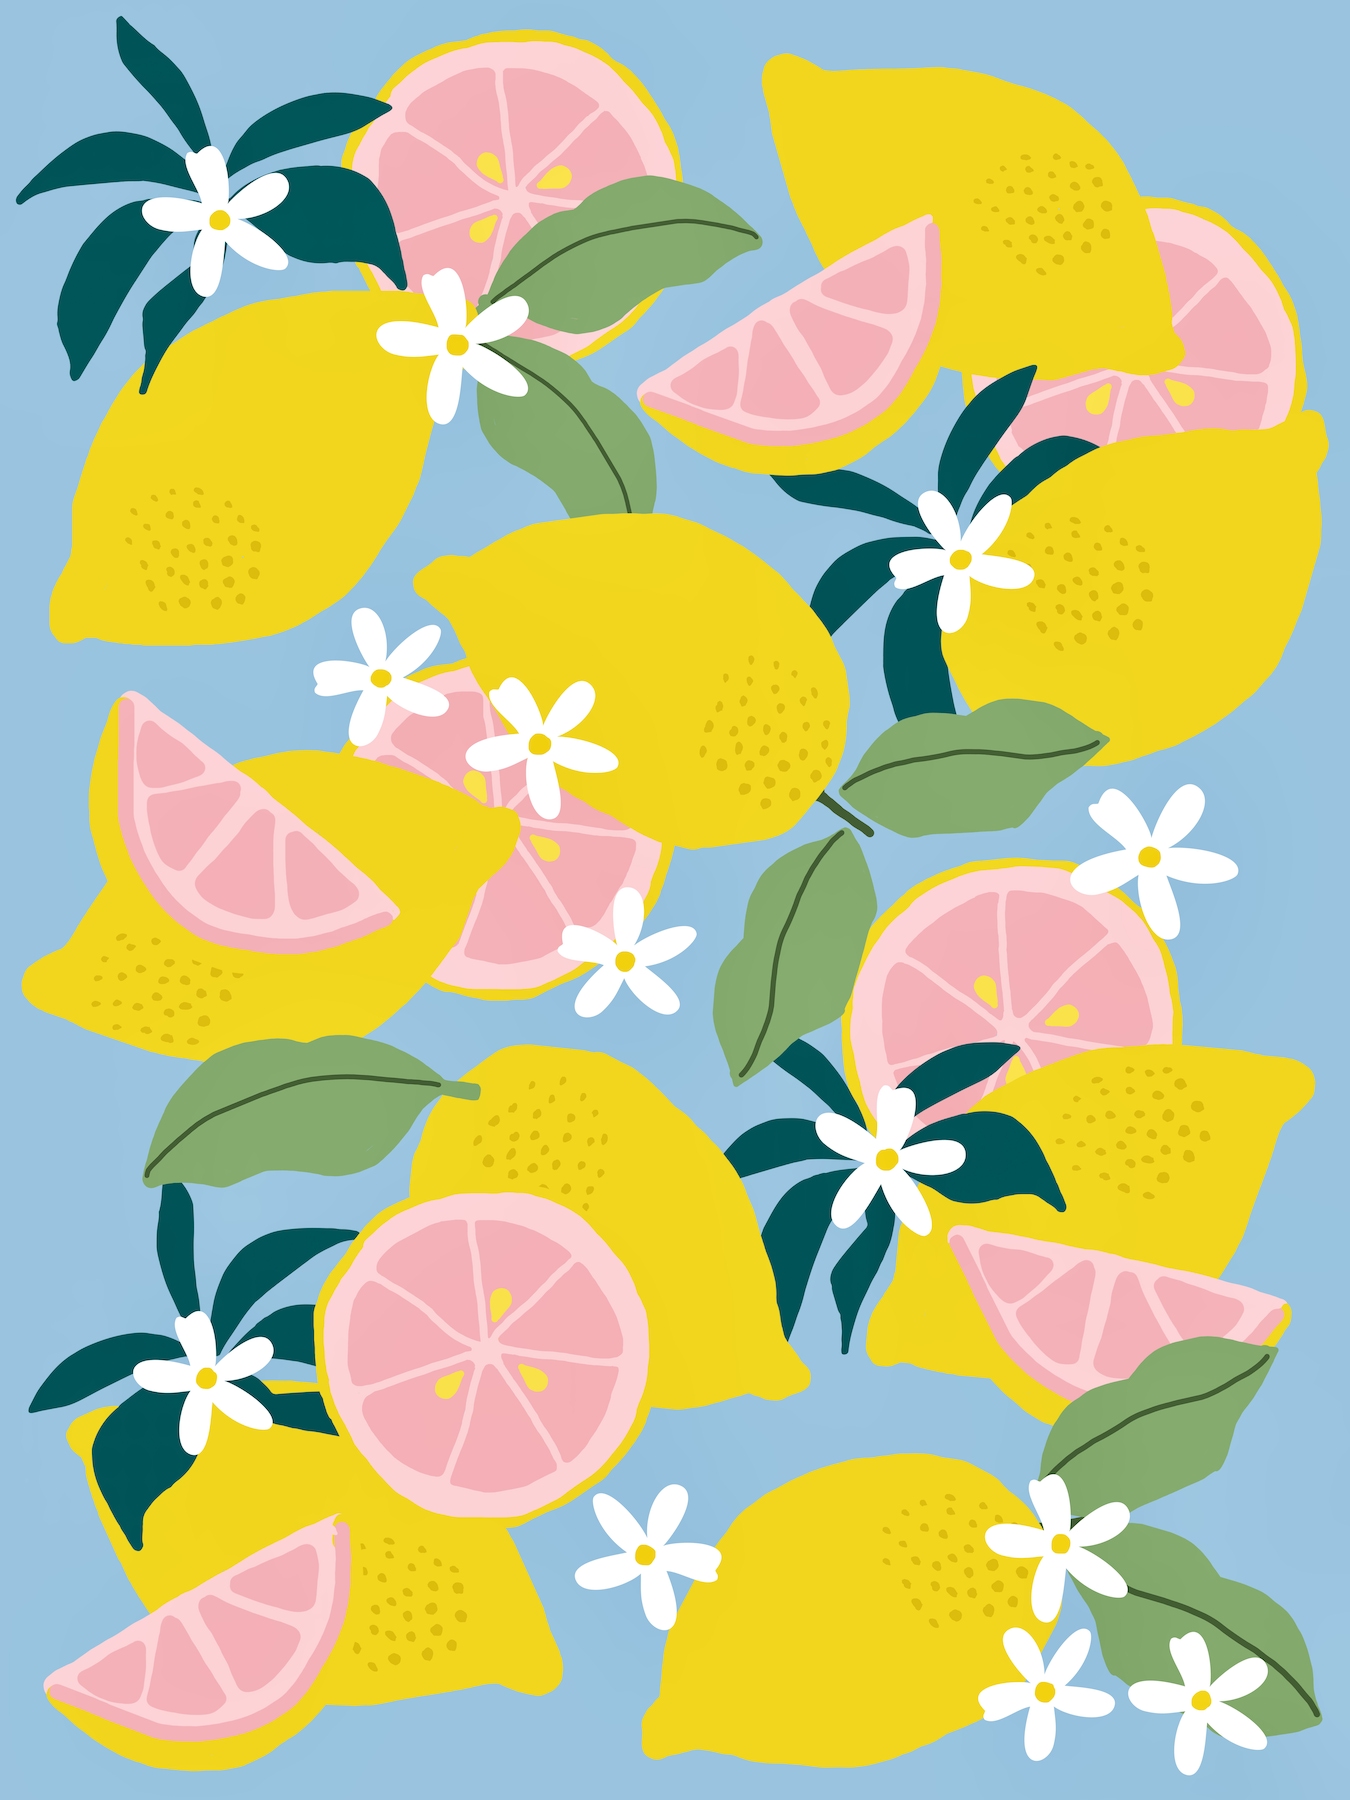 161 Pink lemons Vector Images  Depositphotos